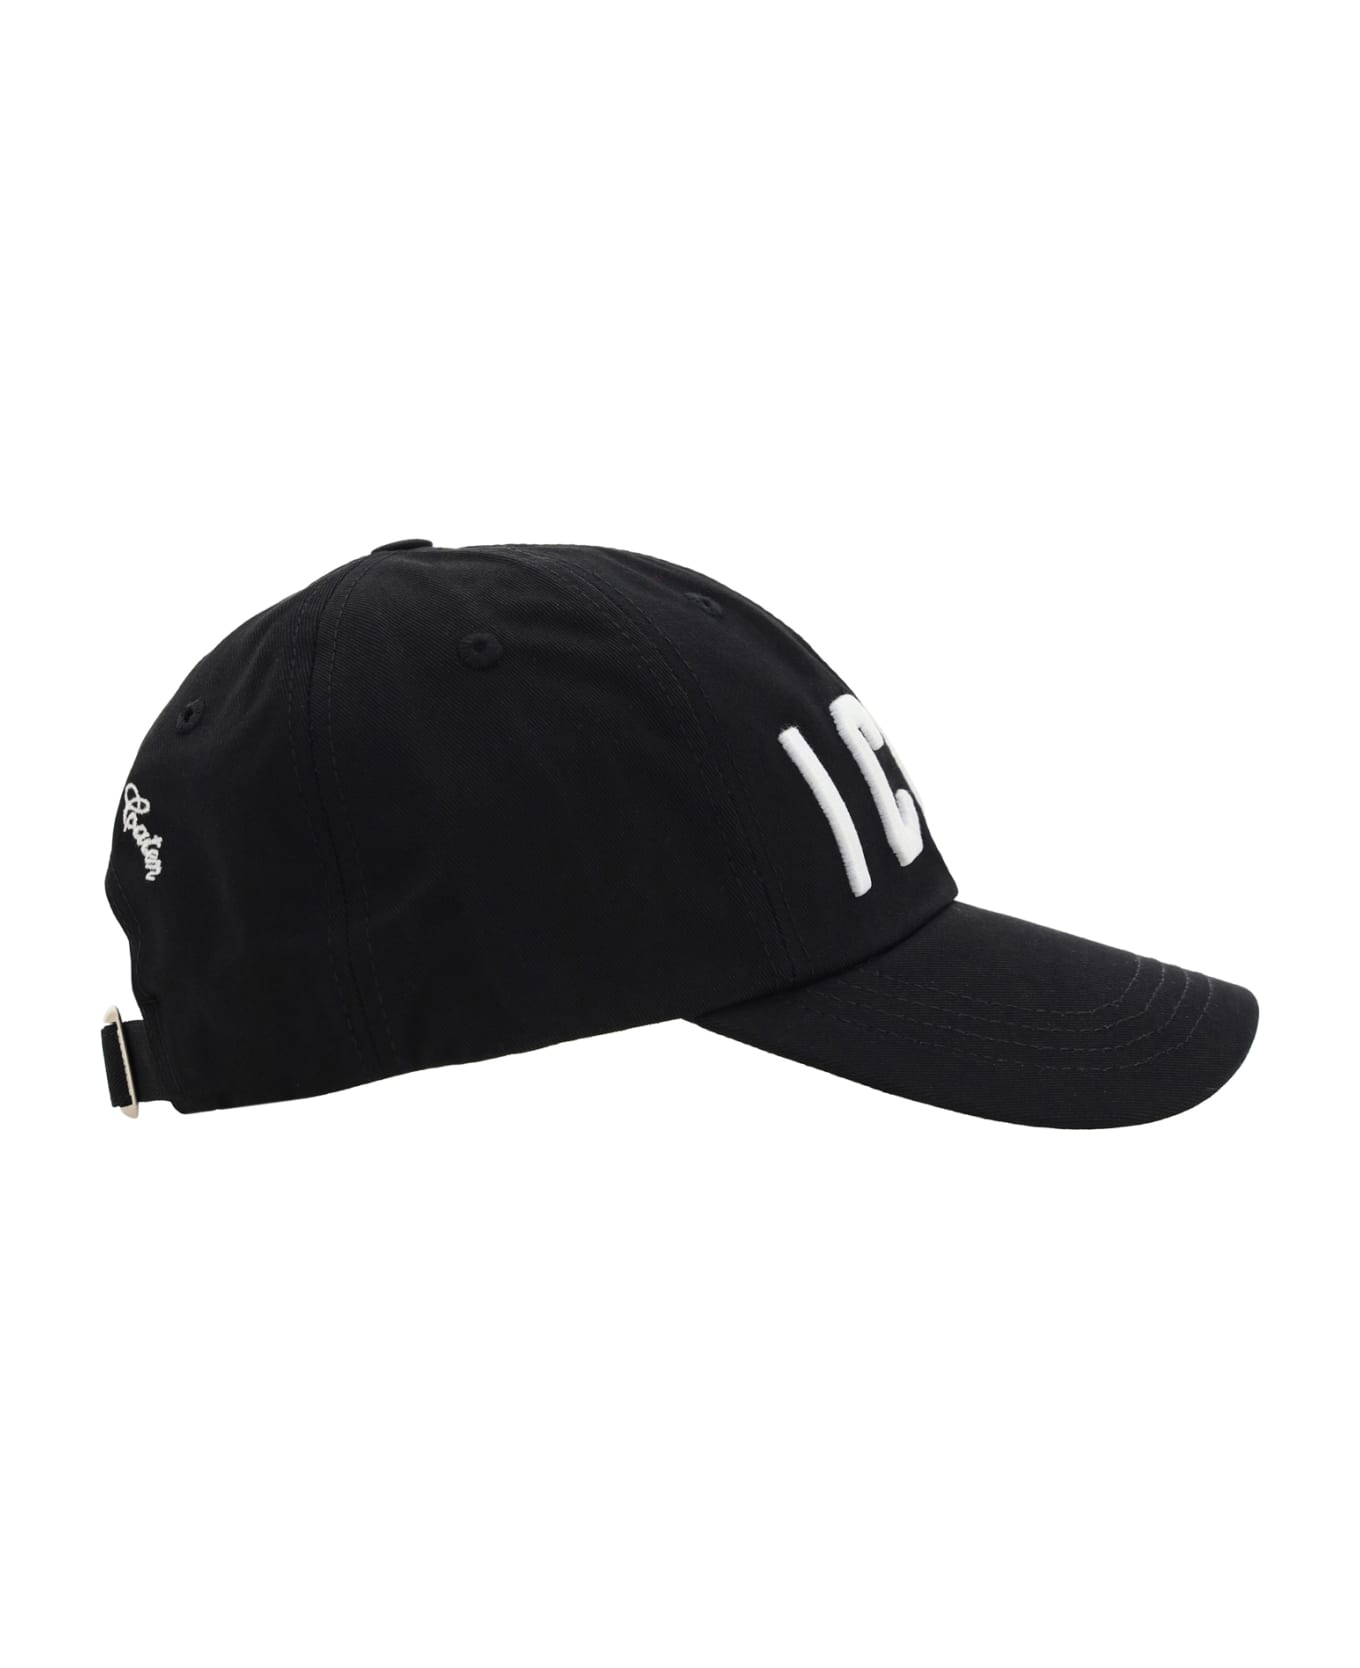 Dsquared2 Logo Embroidery Baseball Cap - black